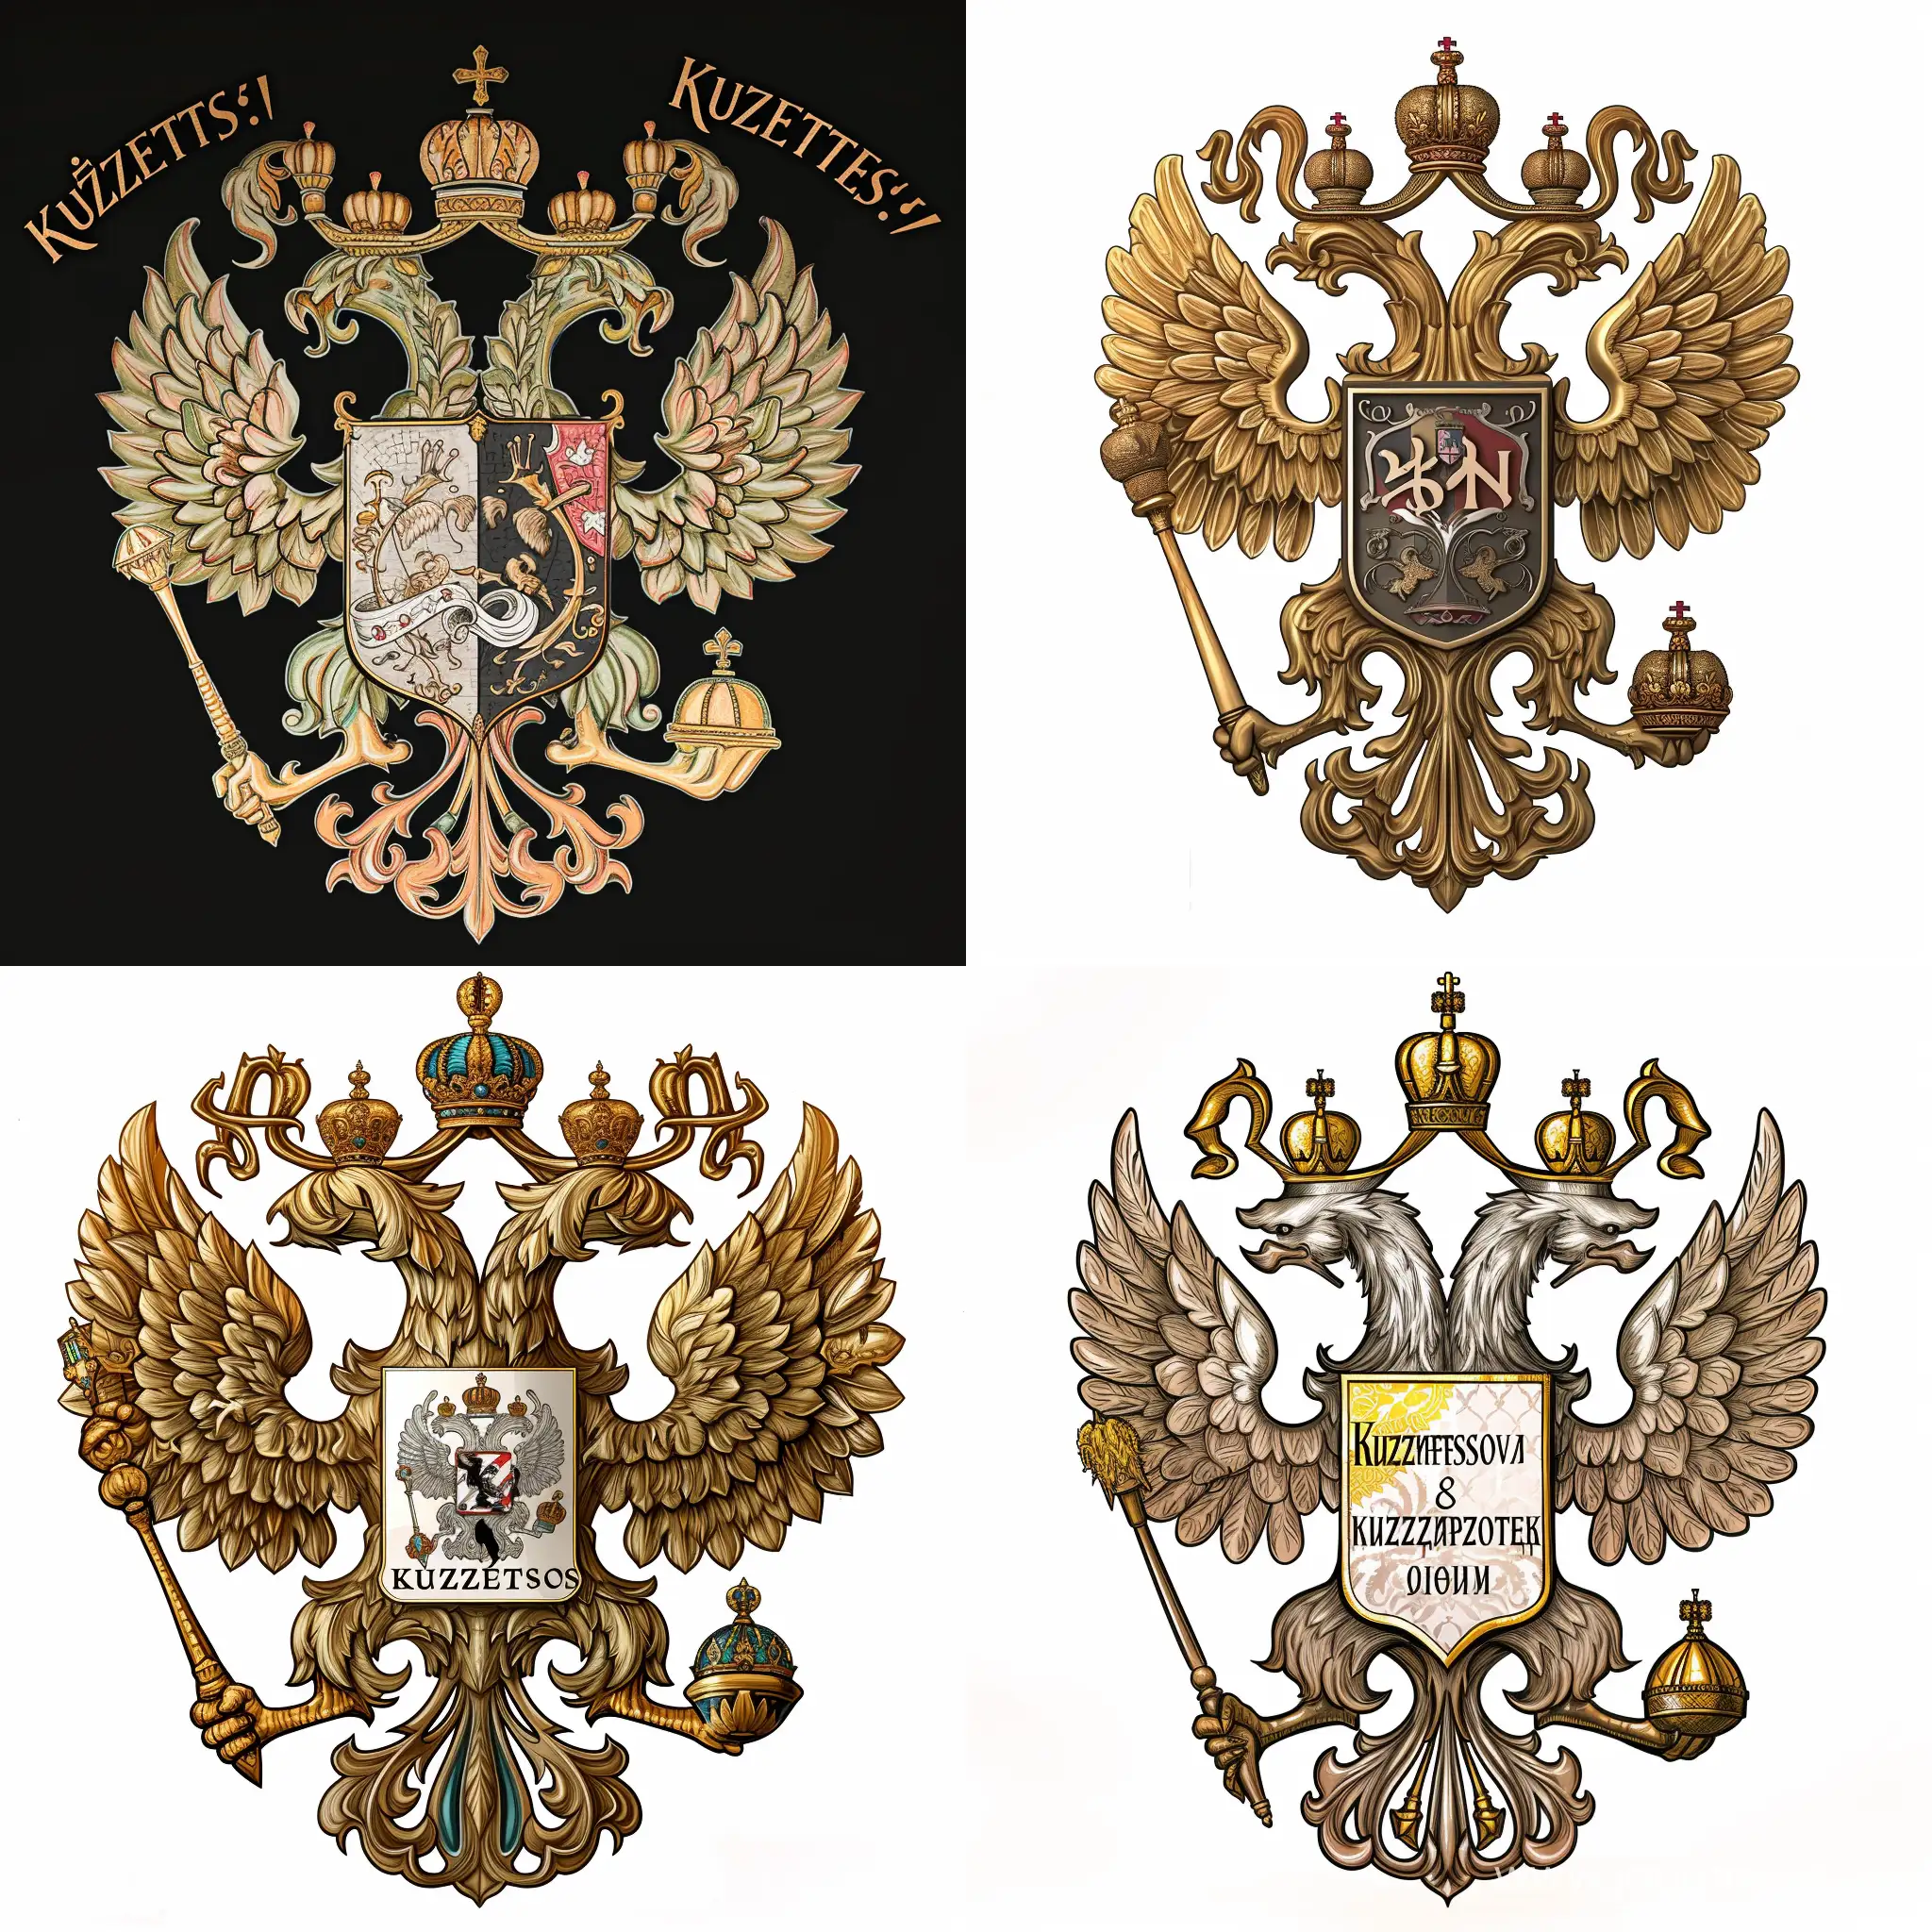 Cherished-Heritage-Kuznetsovs-Family-Coat-of-Arms